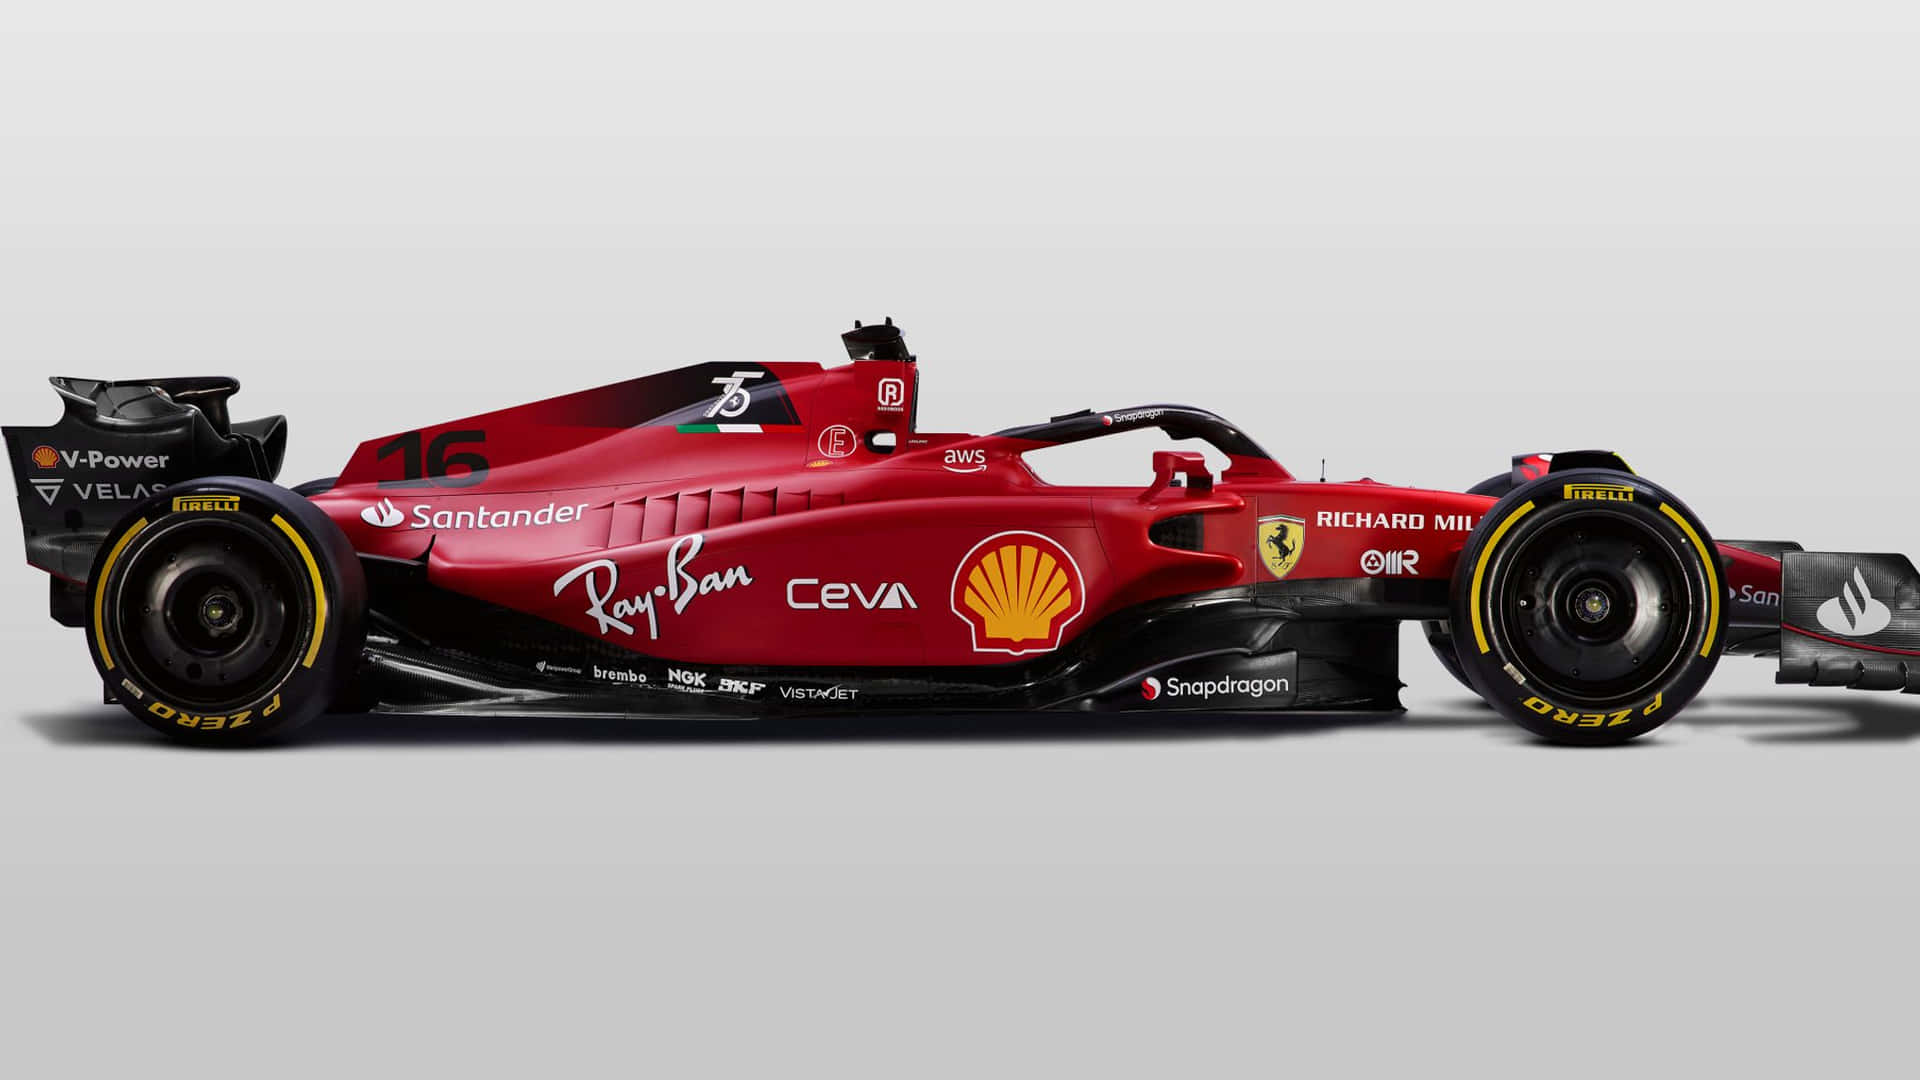 Ferrarif1 Bil 2019